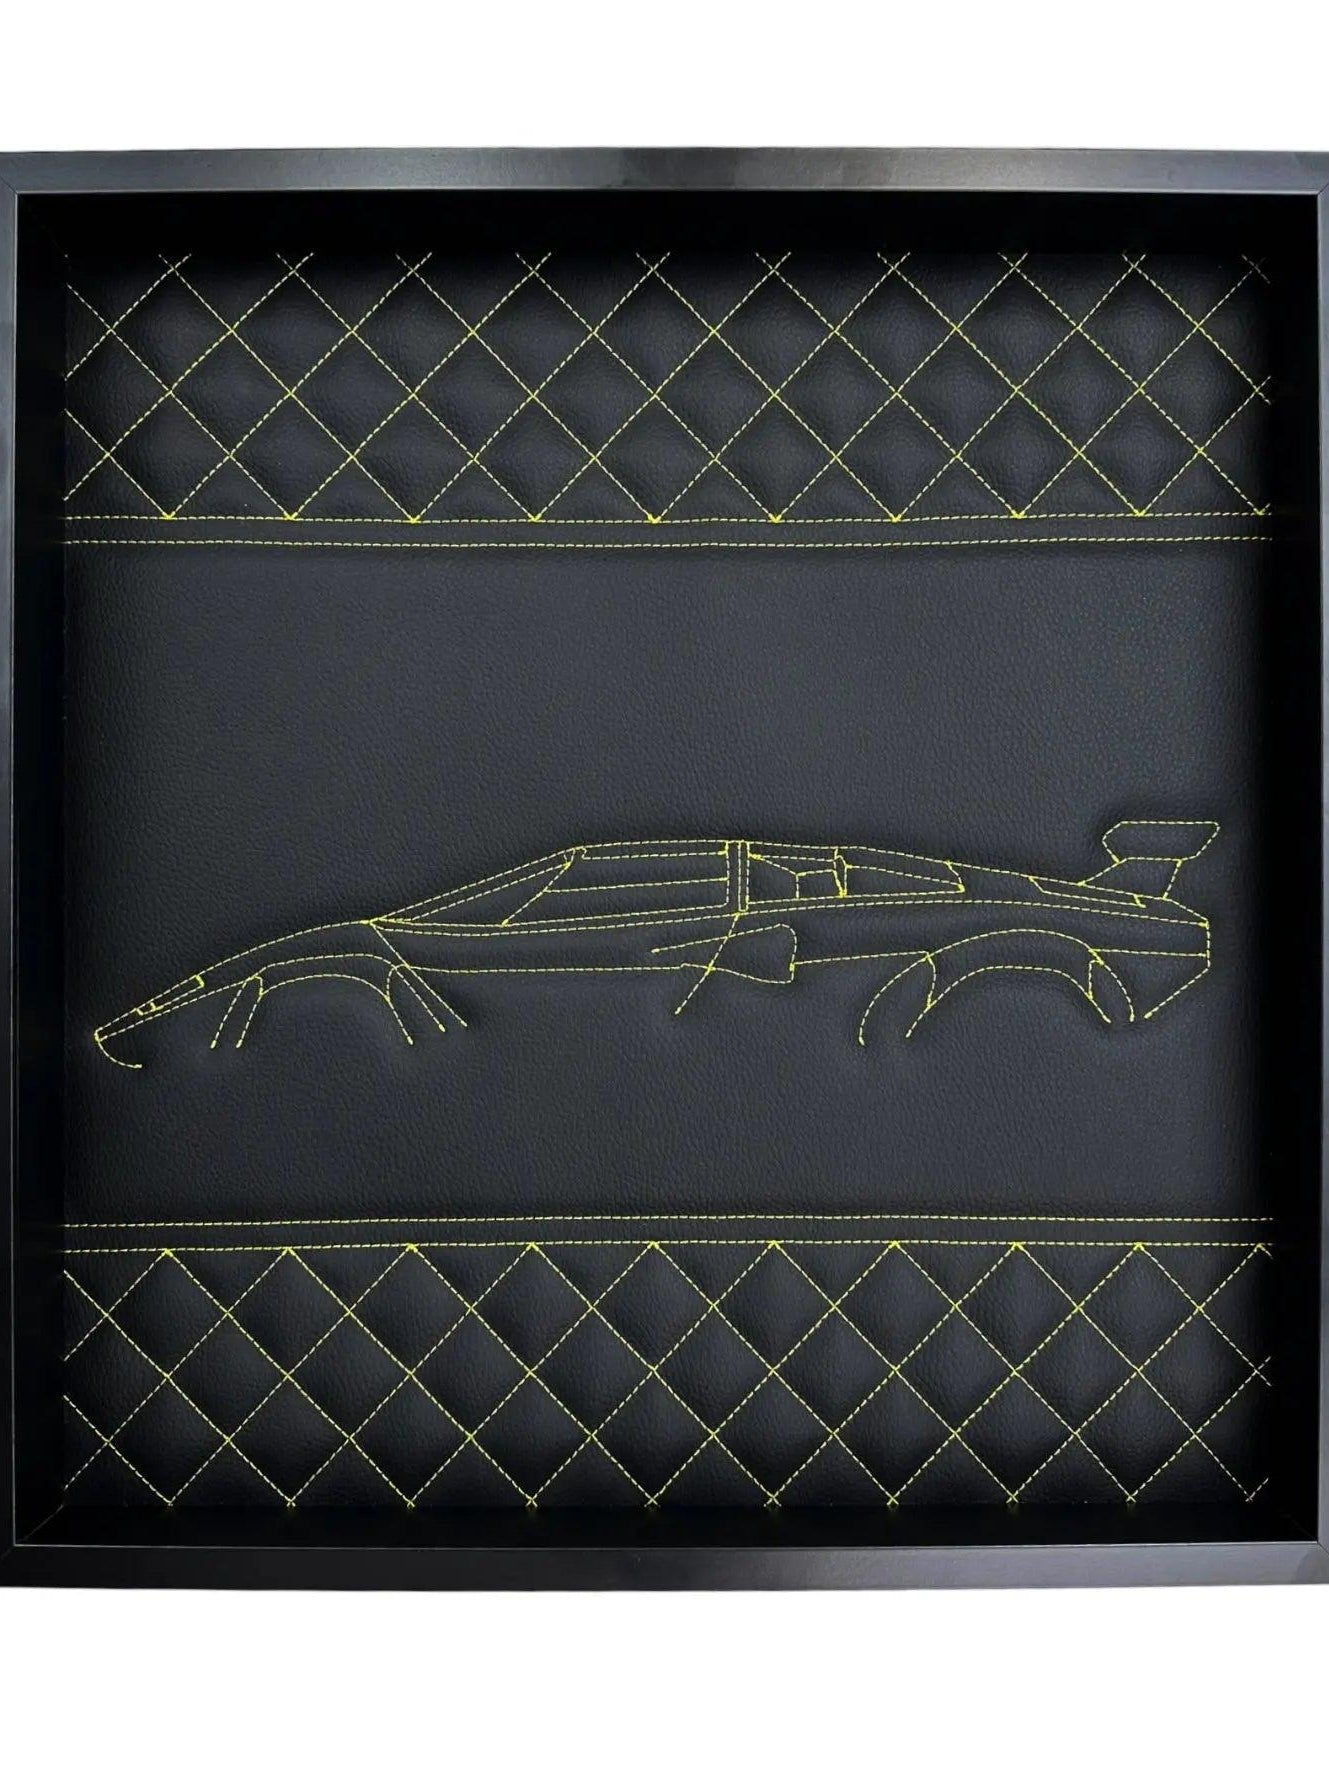 Black Leather Lamborghini Countach Inspired Wall Art: Embroidered Yellow Stitch Luxury Decor